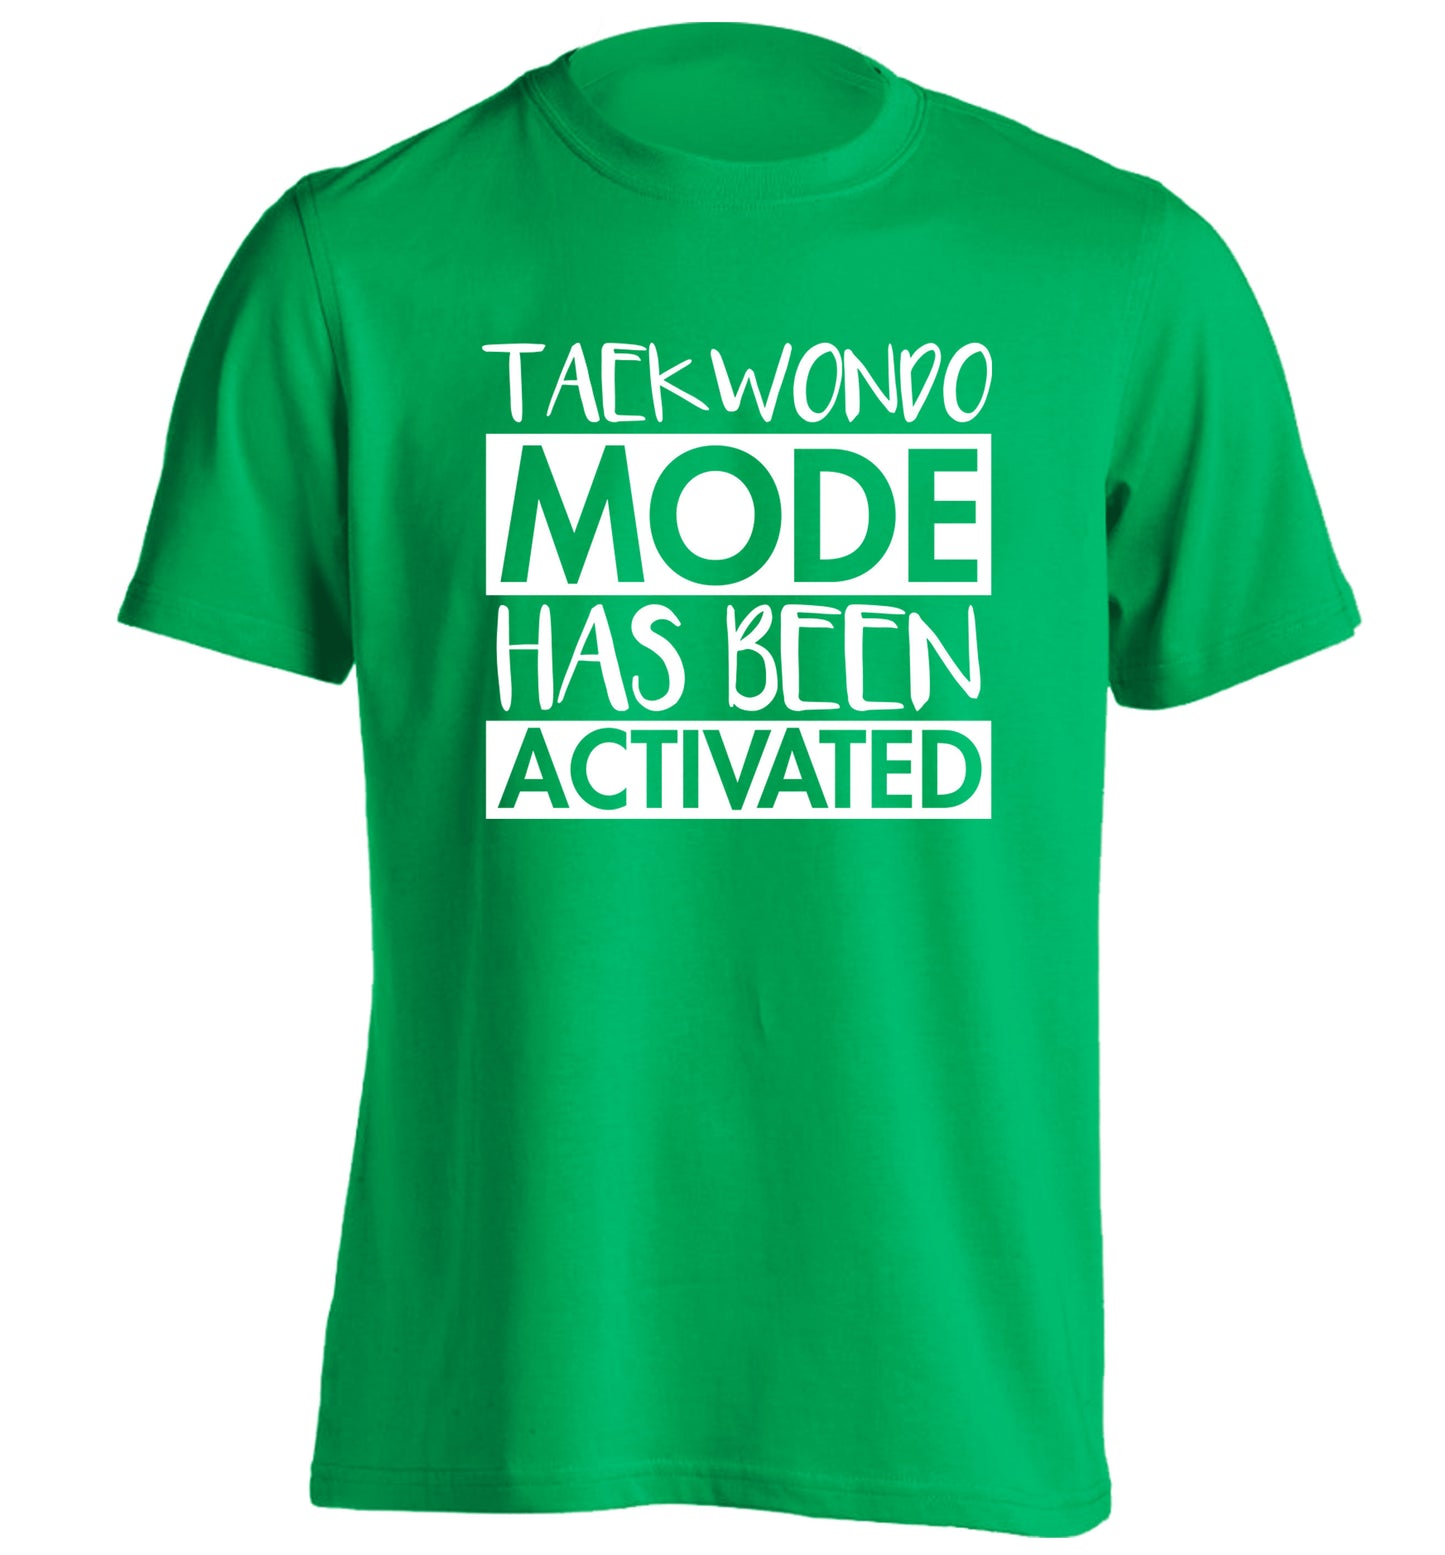 Taekwondo mode activated adults unisex green Tshirt 2XL